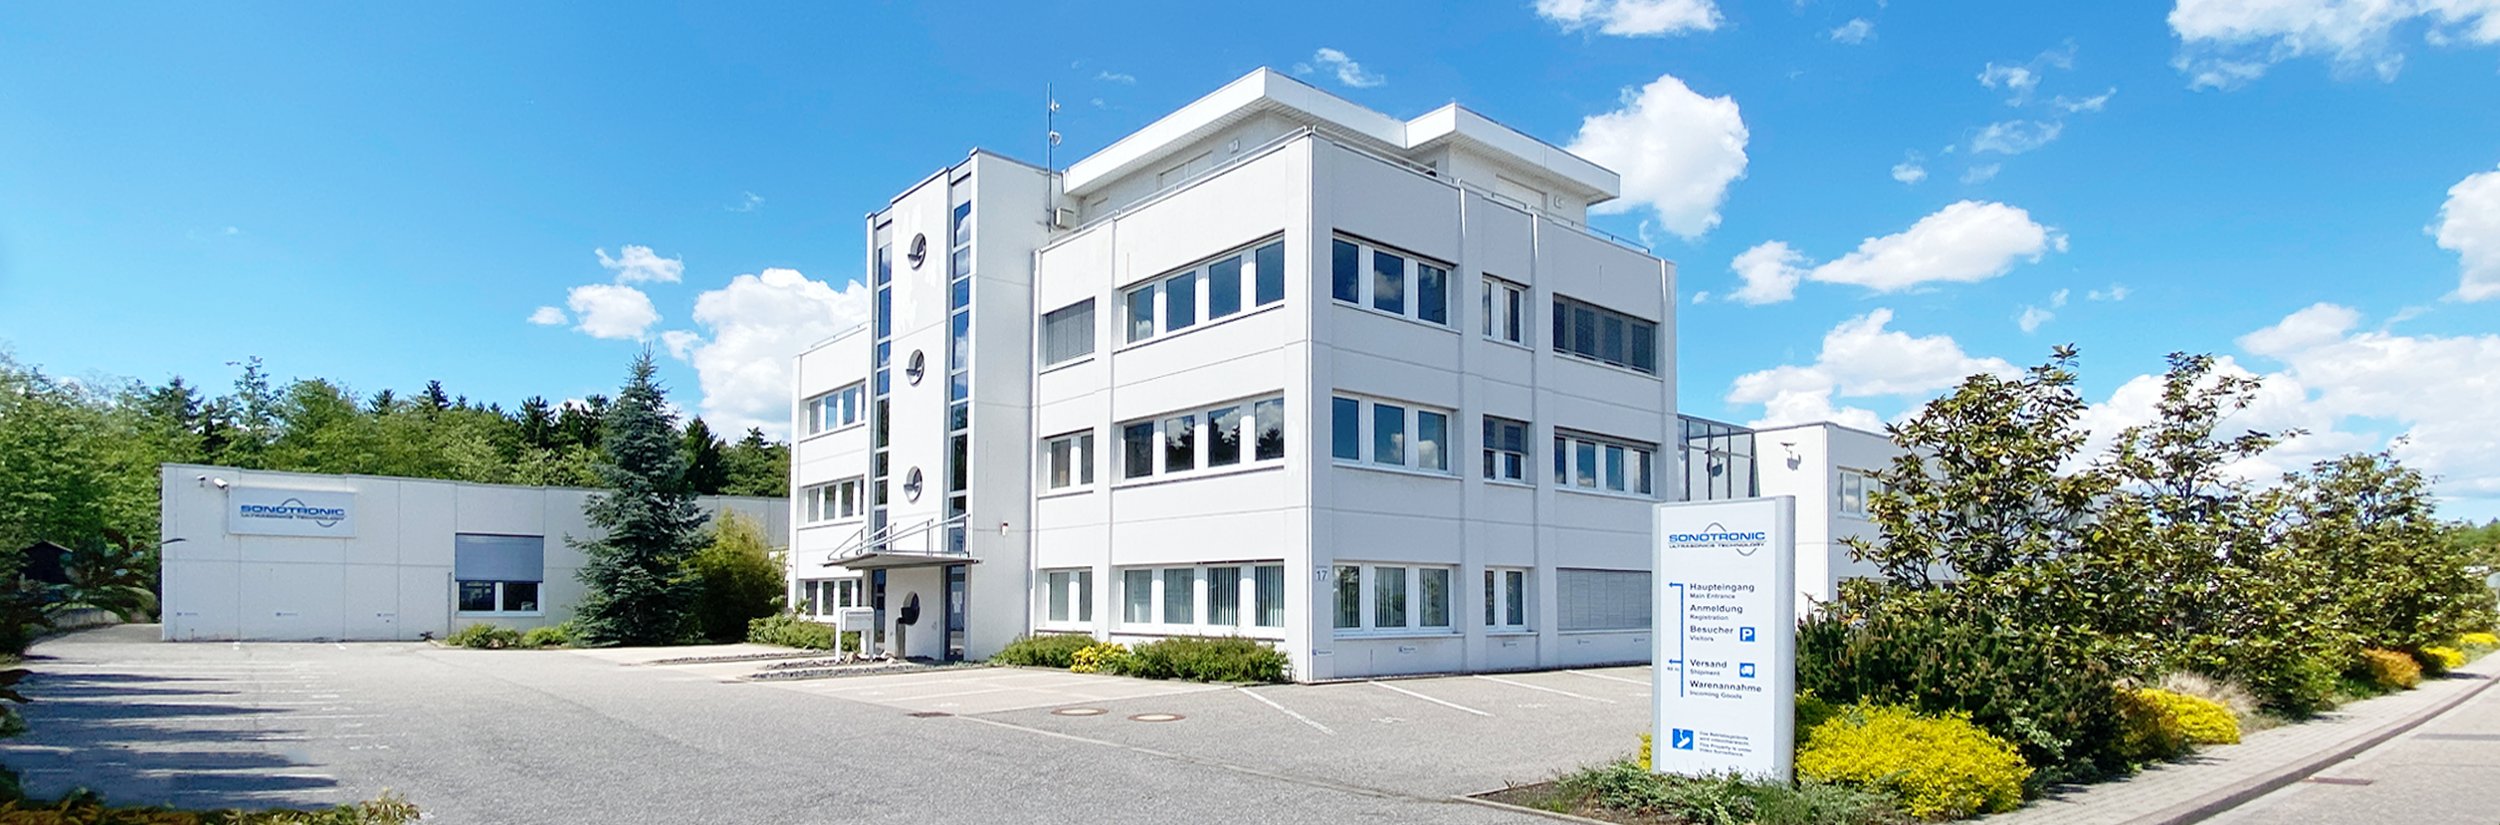 SONOTRONIC Nagel GmbH Hauptsitz Karlsbad-Ittersbach Sondermaschinenbau Ultraschall